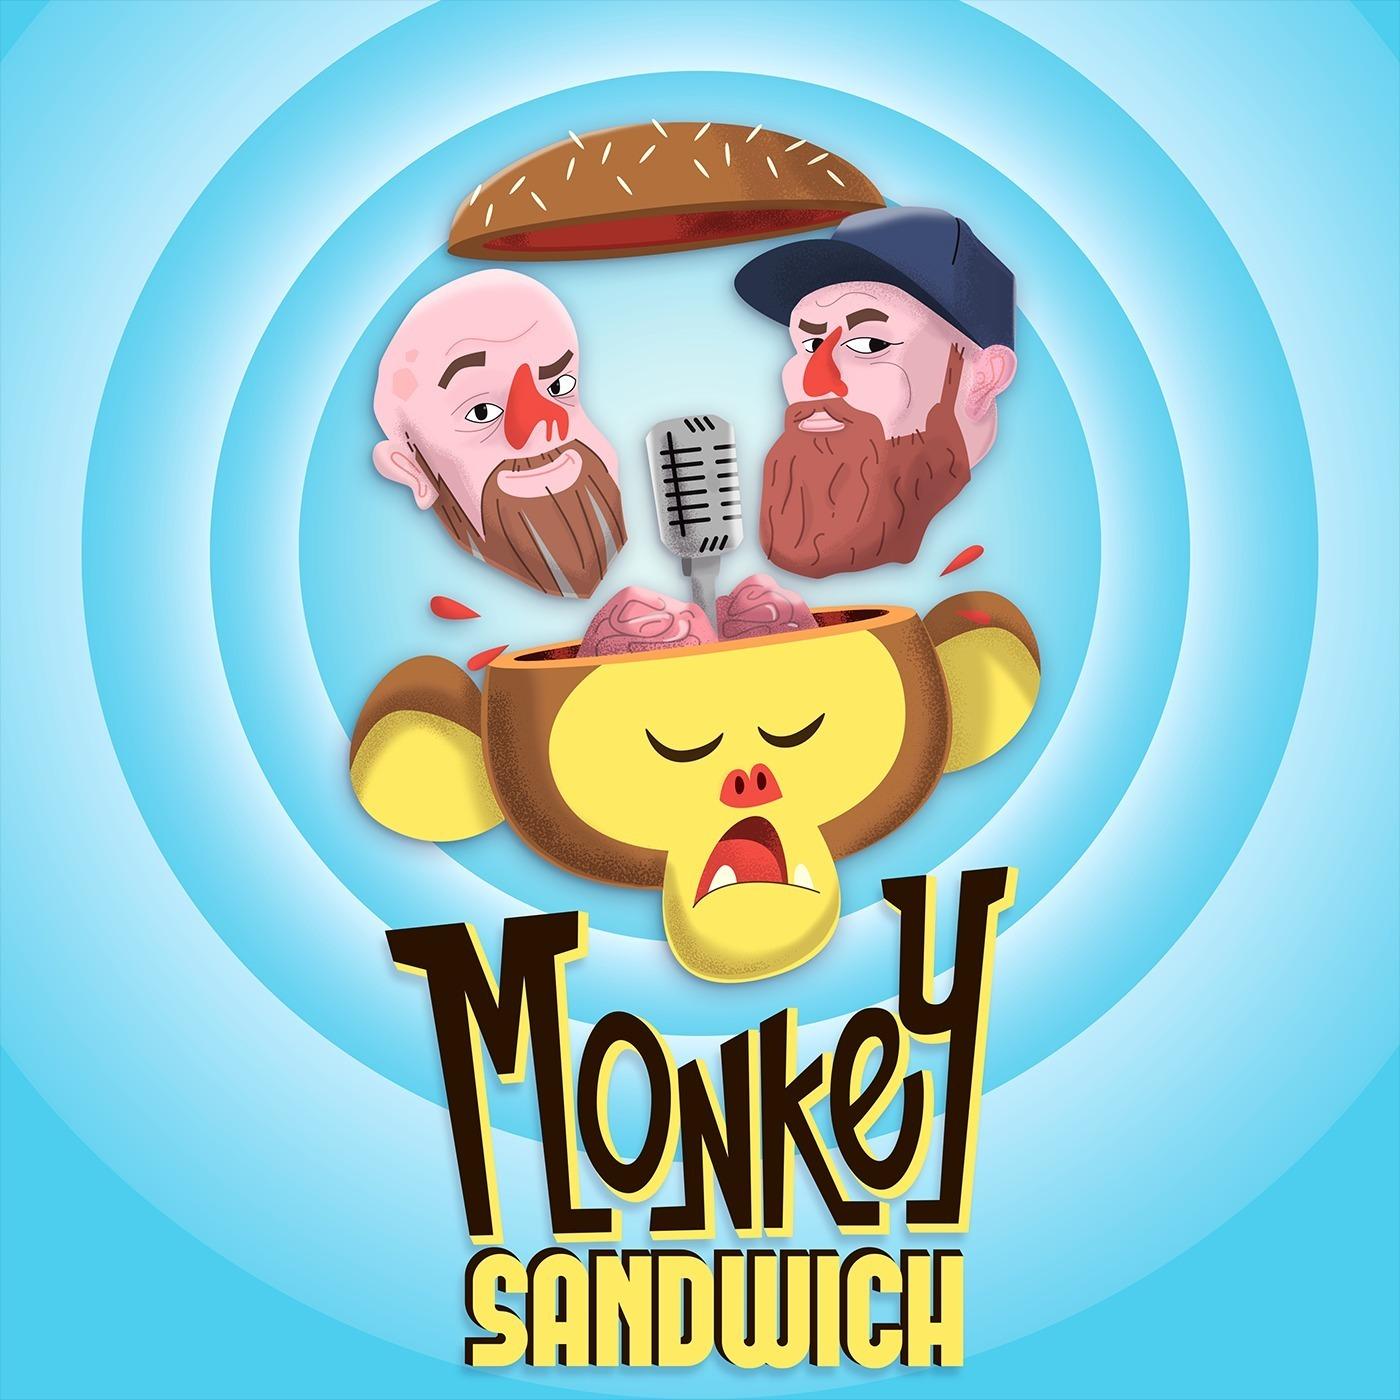 Monkey Sandwich